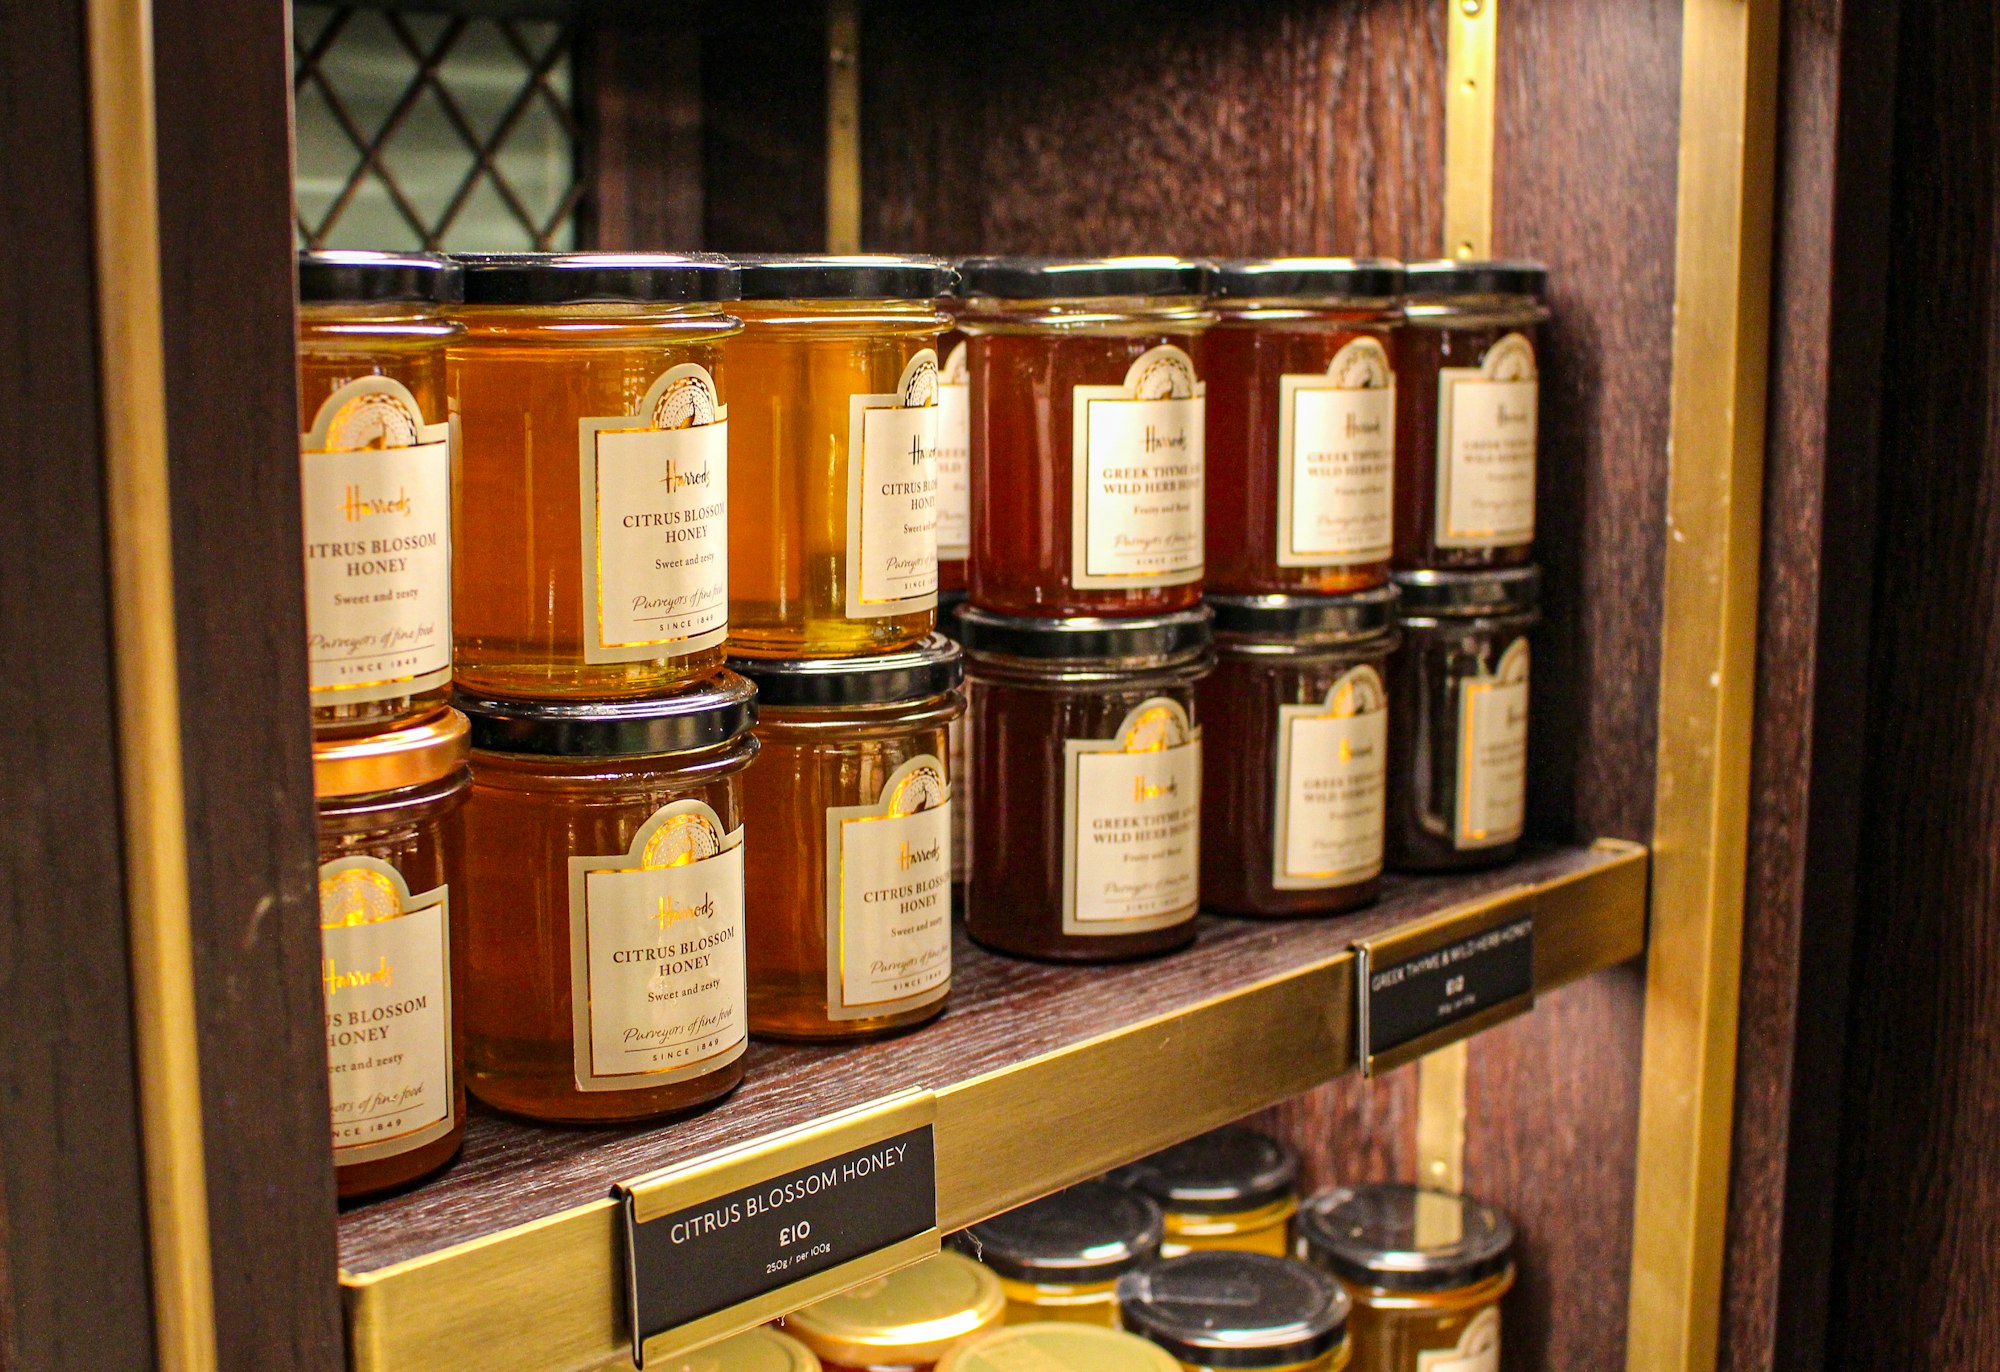 Honey, jams, preserves, marmalades in Harrods, Brompton Road, London, Great Britain: Citrus Blossom Honey, Greek Thyme Wild Herbs Honey, all in jars on wooden shelves.